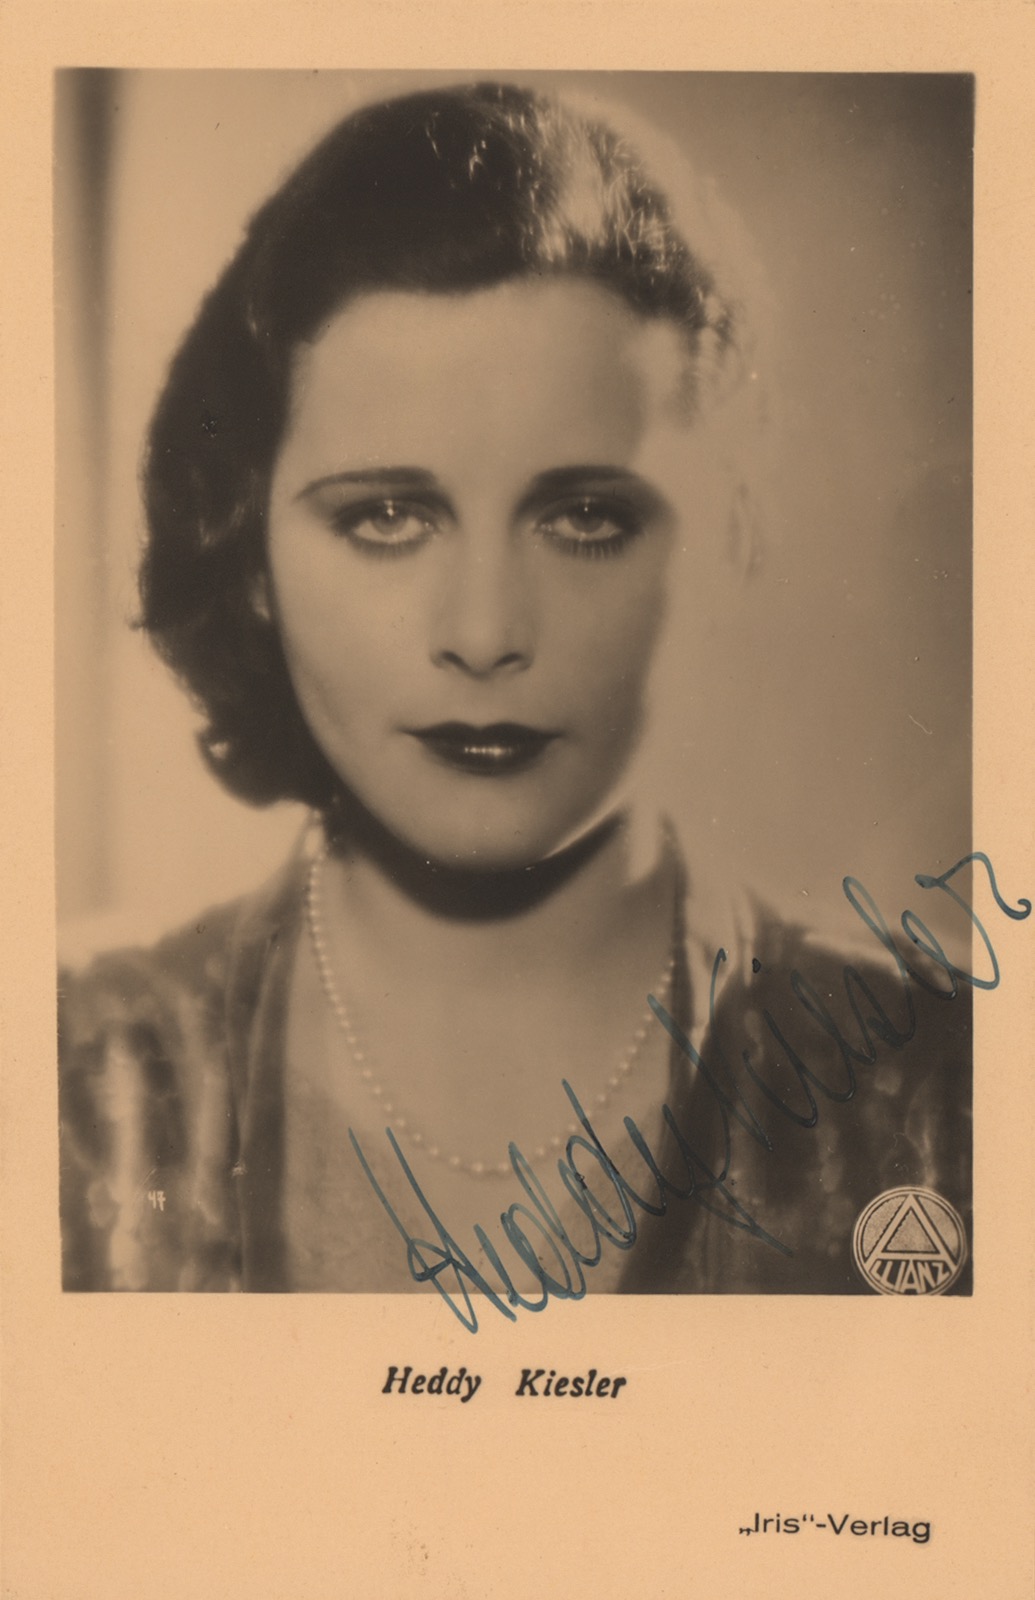 Lot #762 Hedy Lamarr Signed Photograph - Image 1